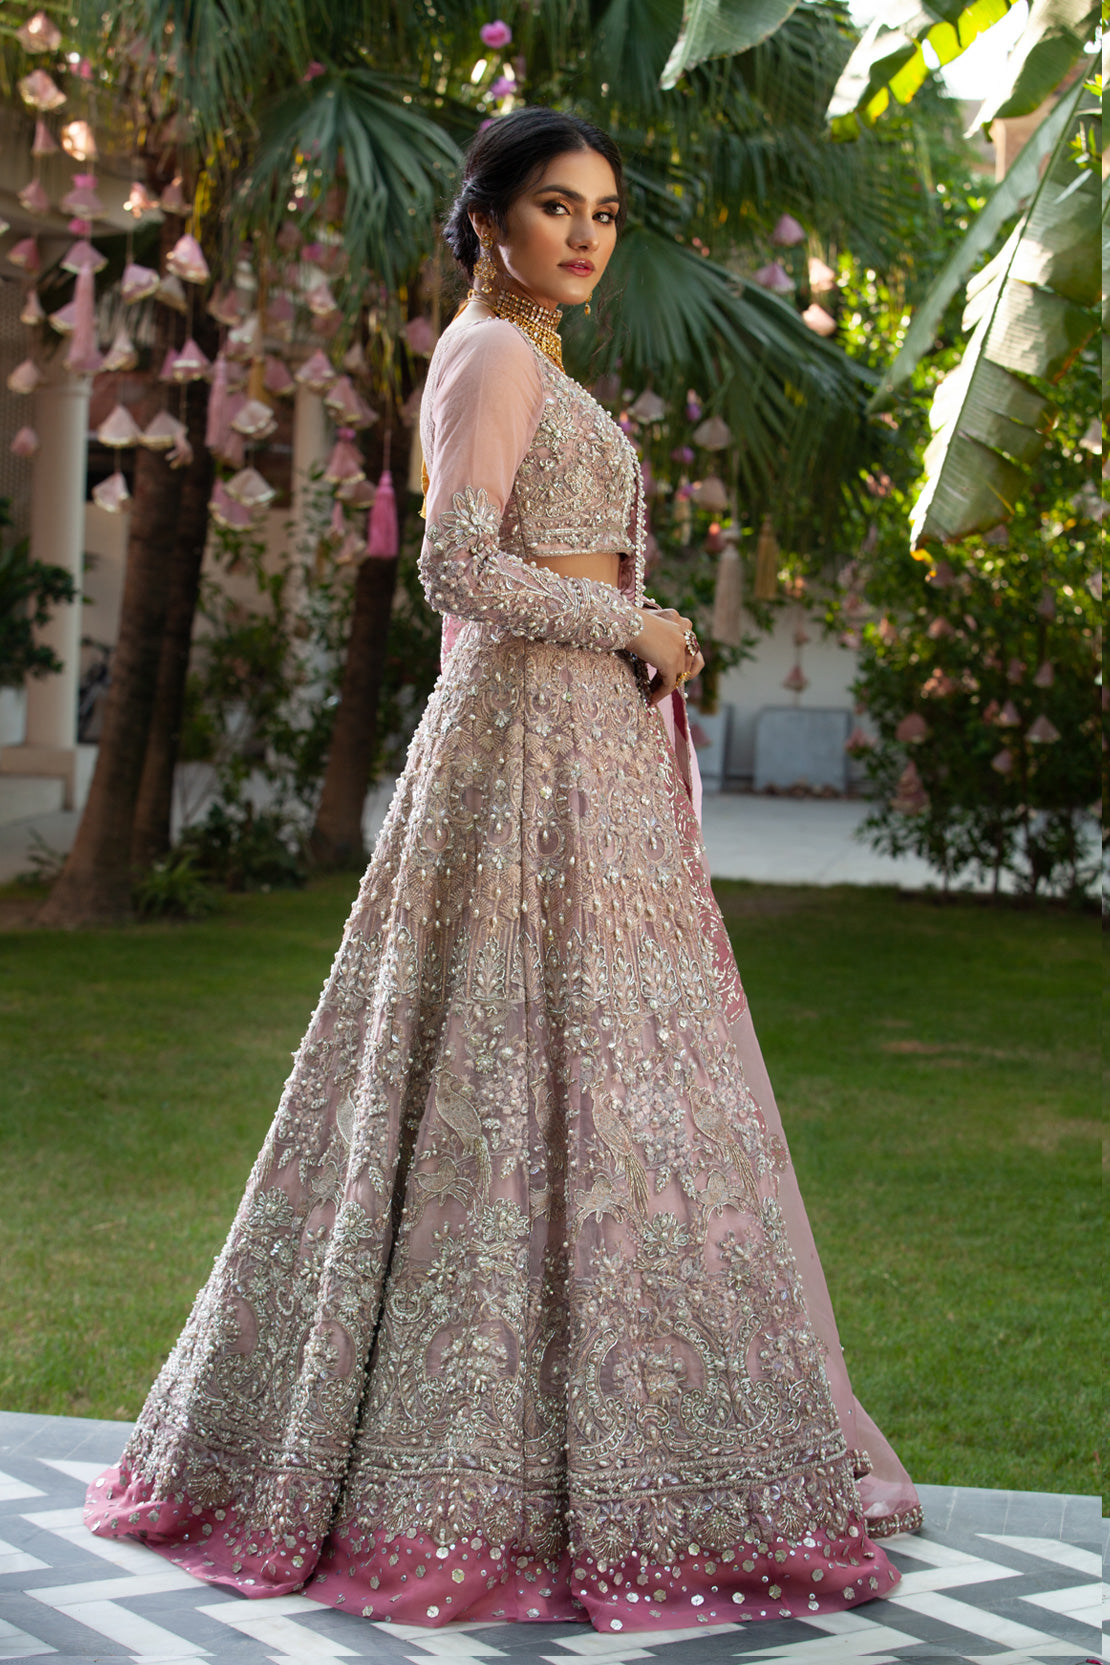 Aviana Rose - Bridal Couture'23 by Saira Rizwan